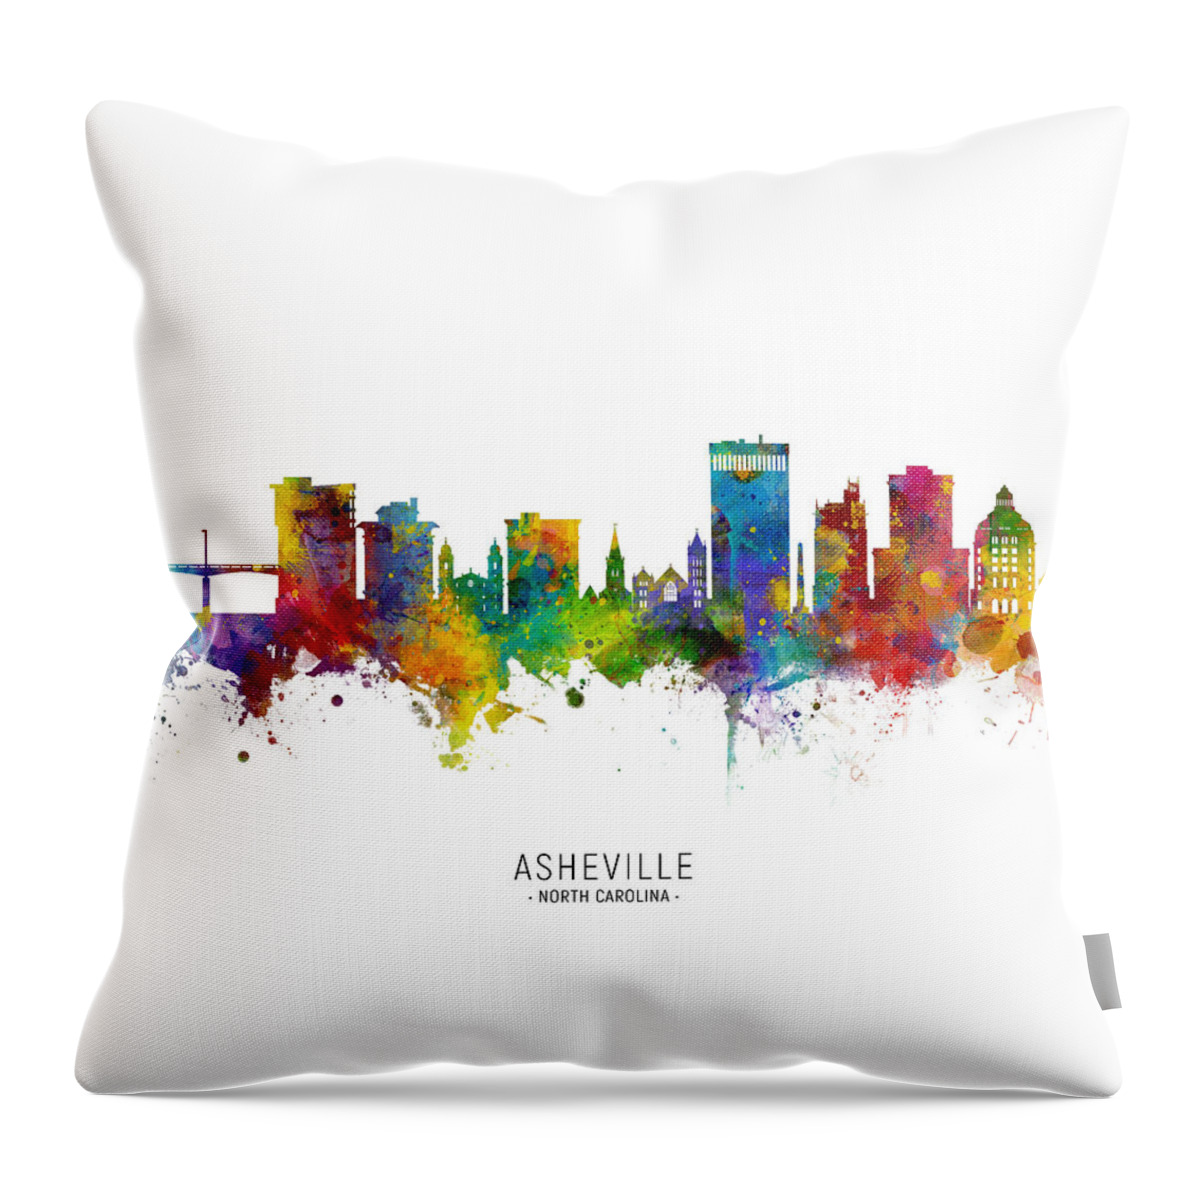 Asheville Throw Pillow featuring the digital art Asheville North Carolina Skyline #2 by Michael Tompsett